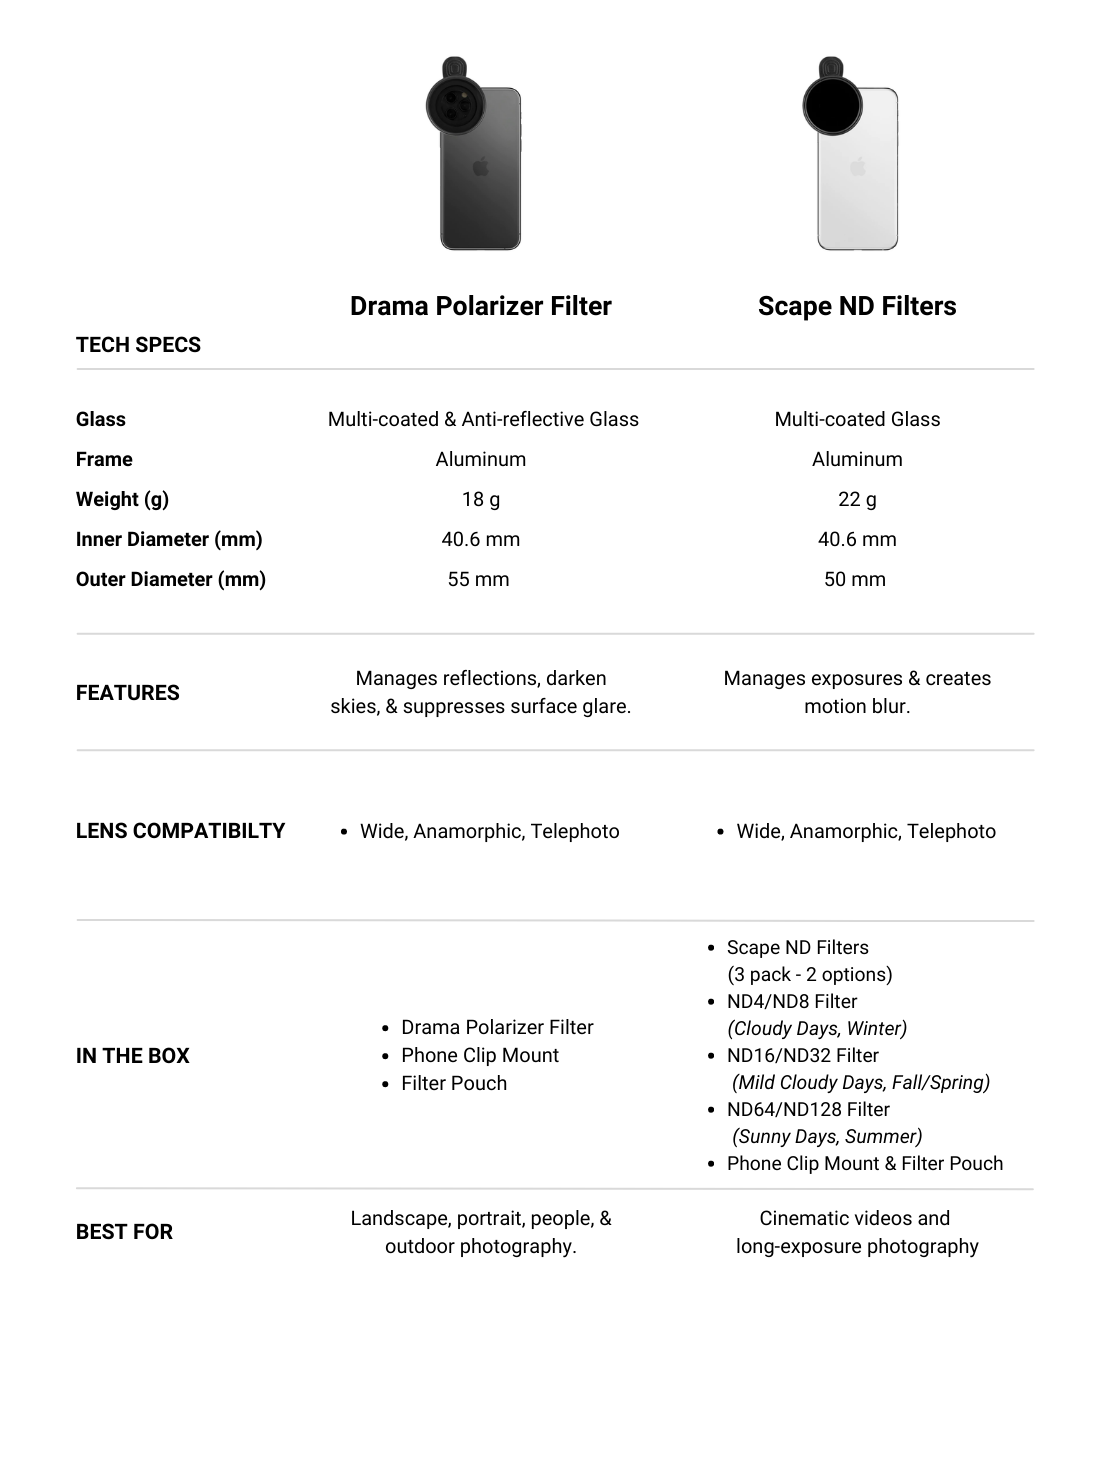 SANDMARC Filter Comparison Guide